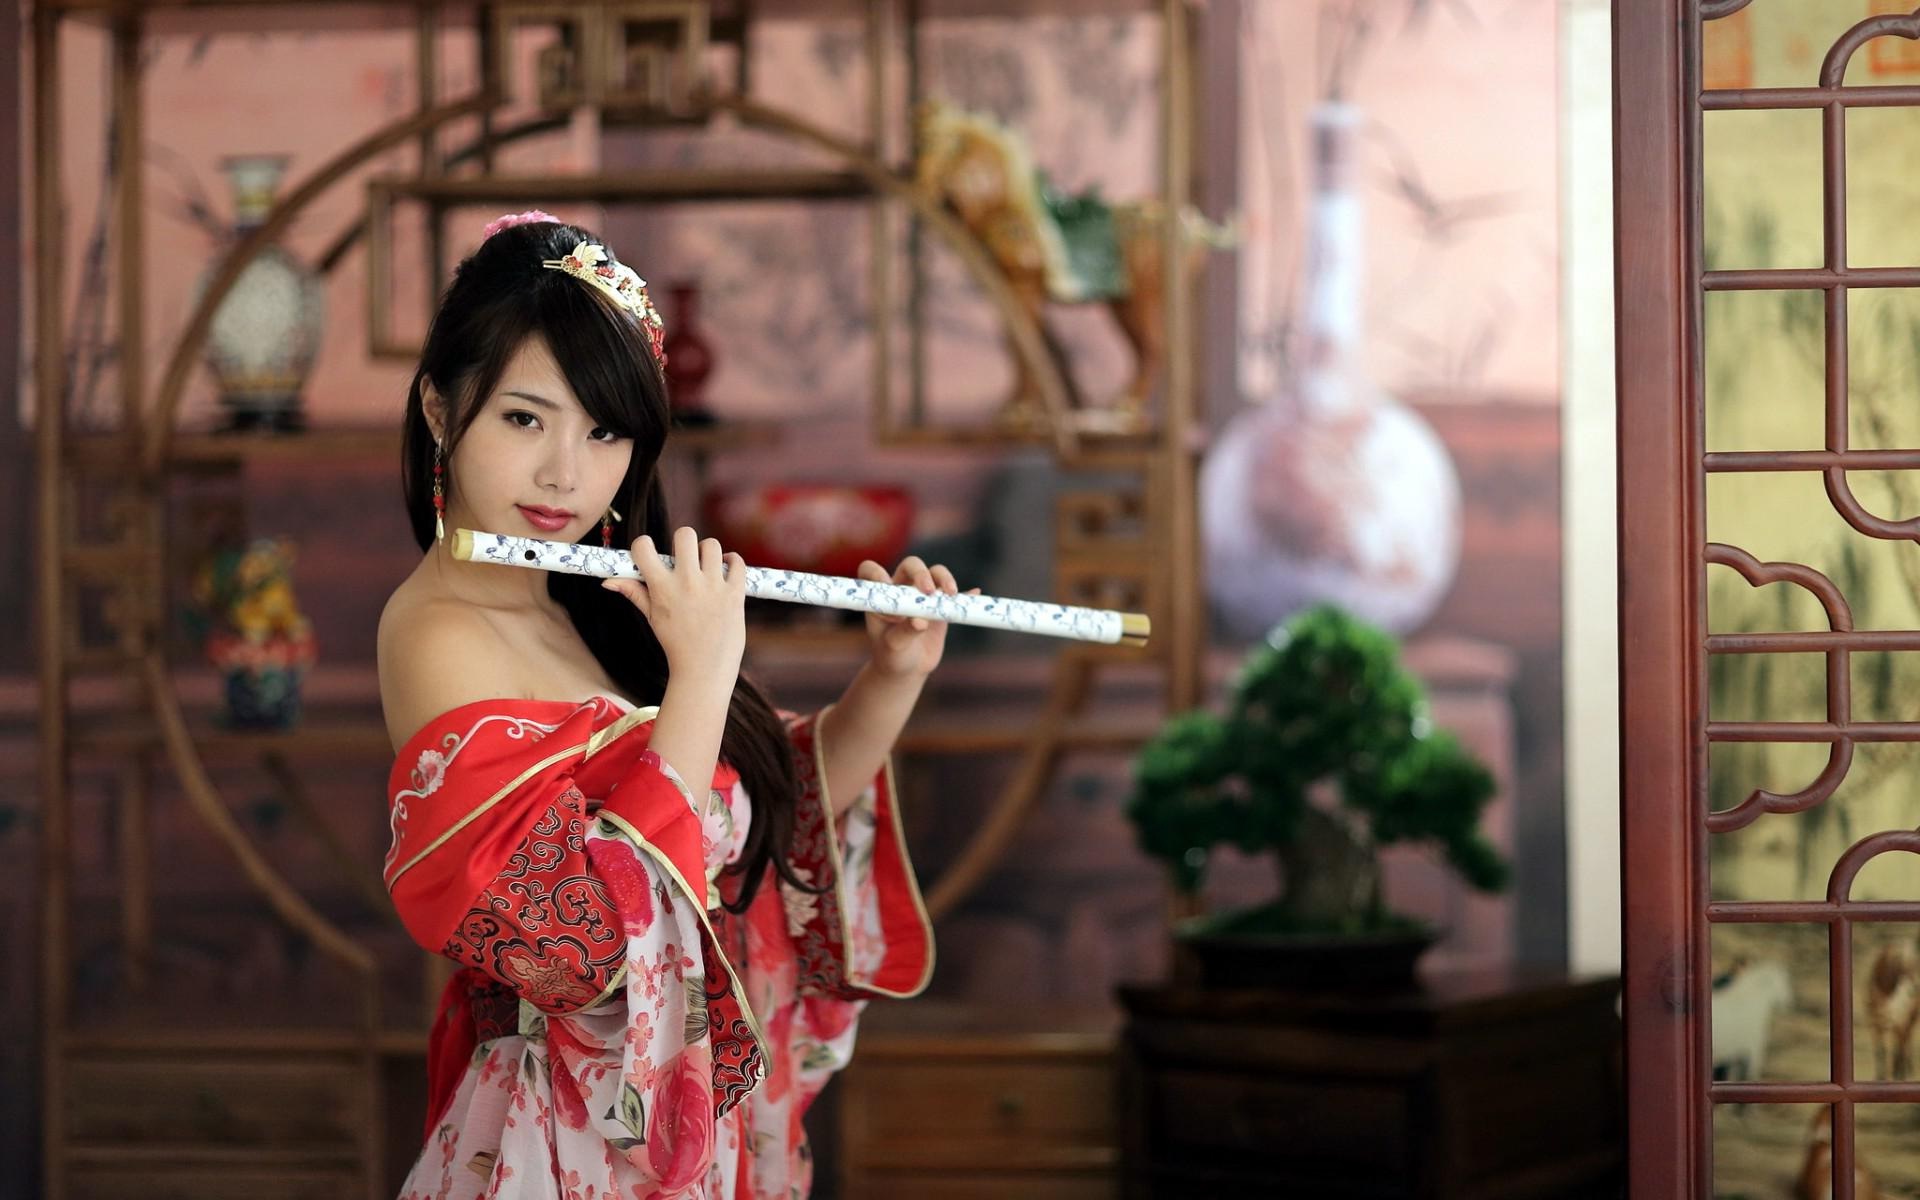 Flute playing beautiful girl | HD Wallpapers Rocks